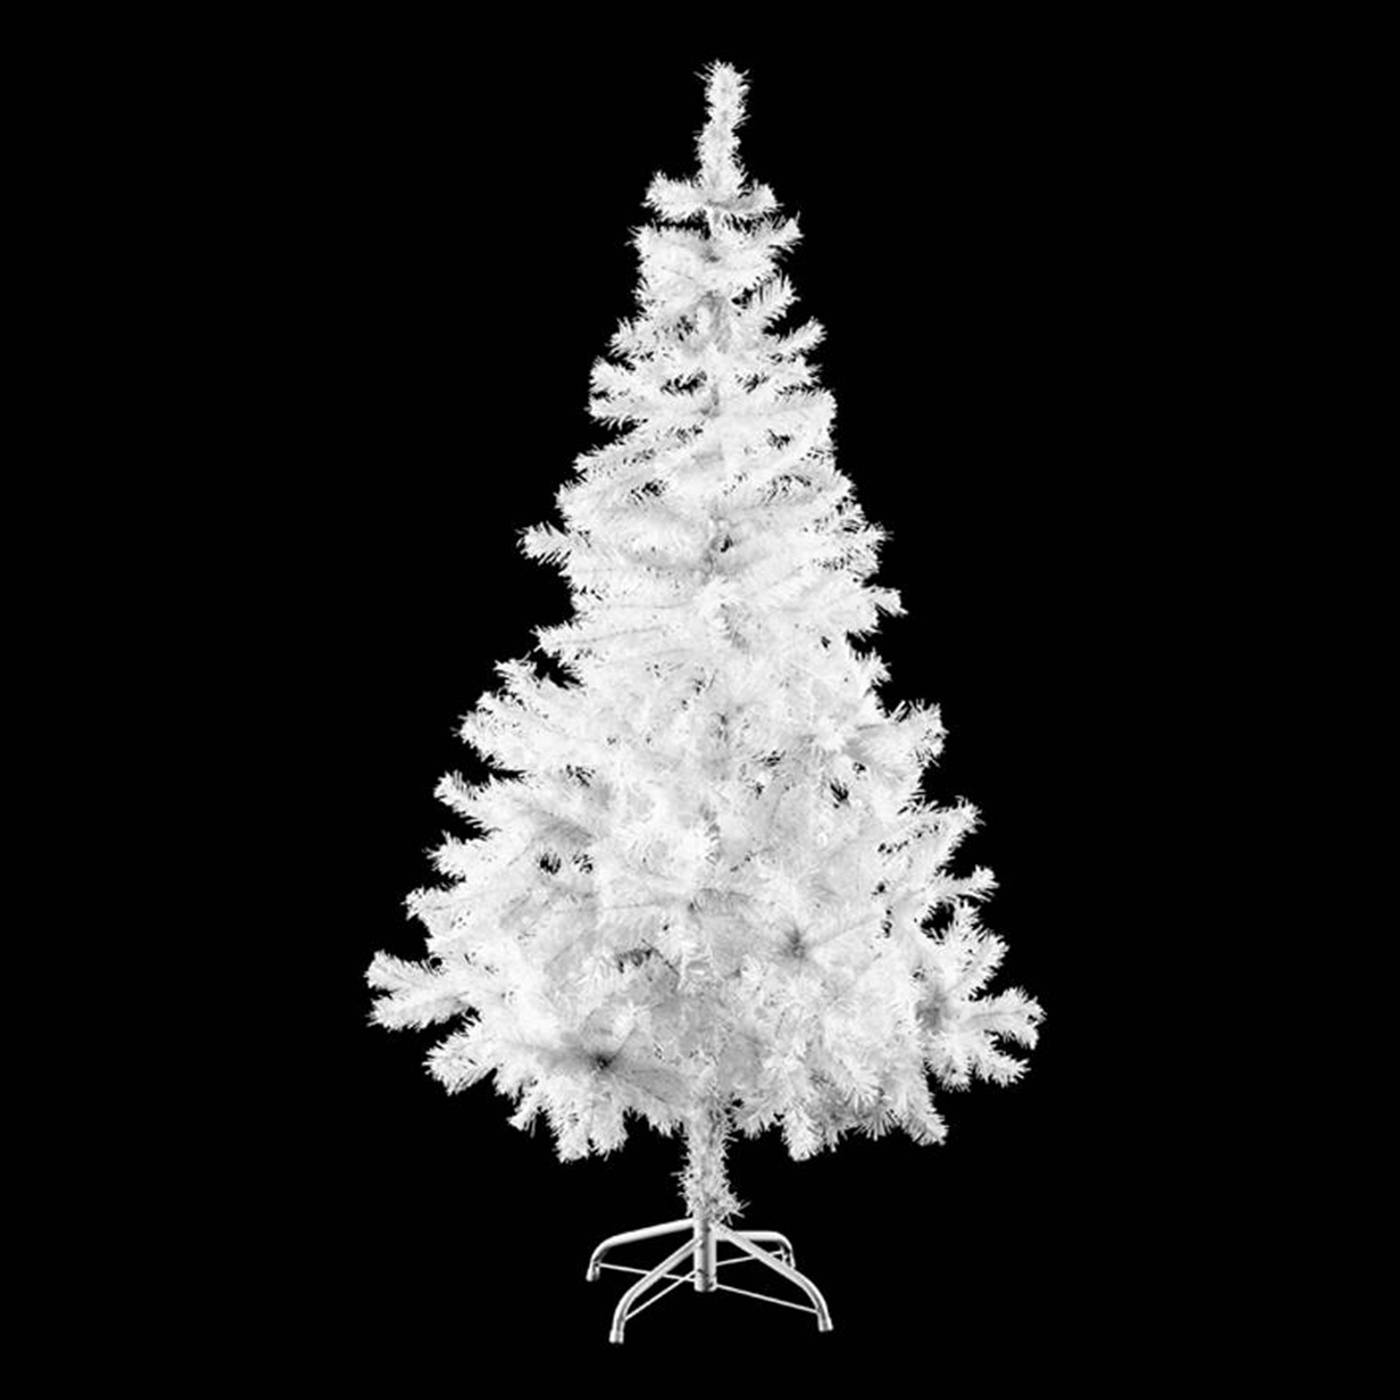 klep Koning Lear bord Witte kerstboom 150cm kopen? | De Horeca Bazaar